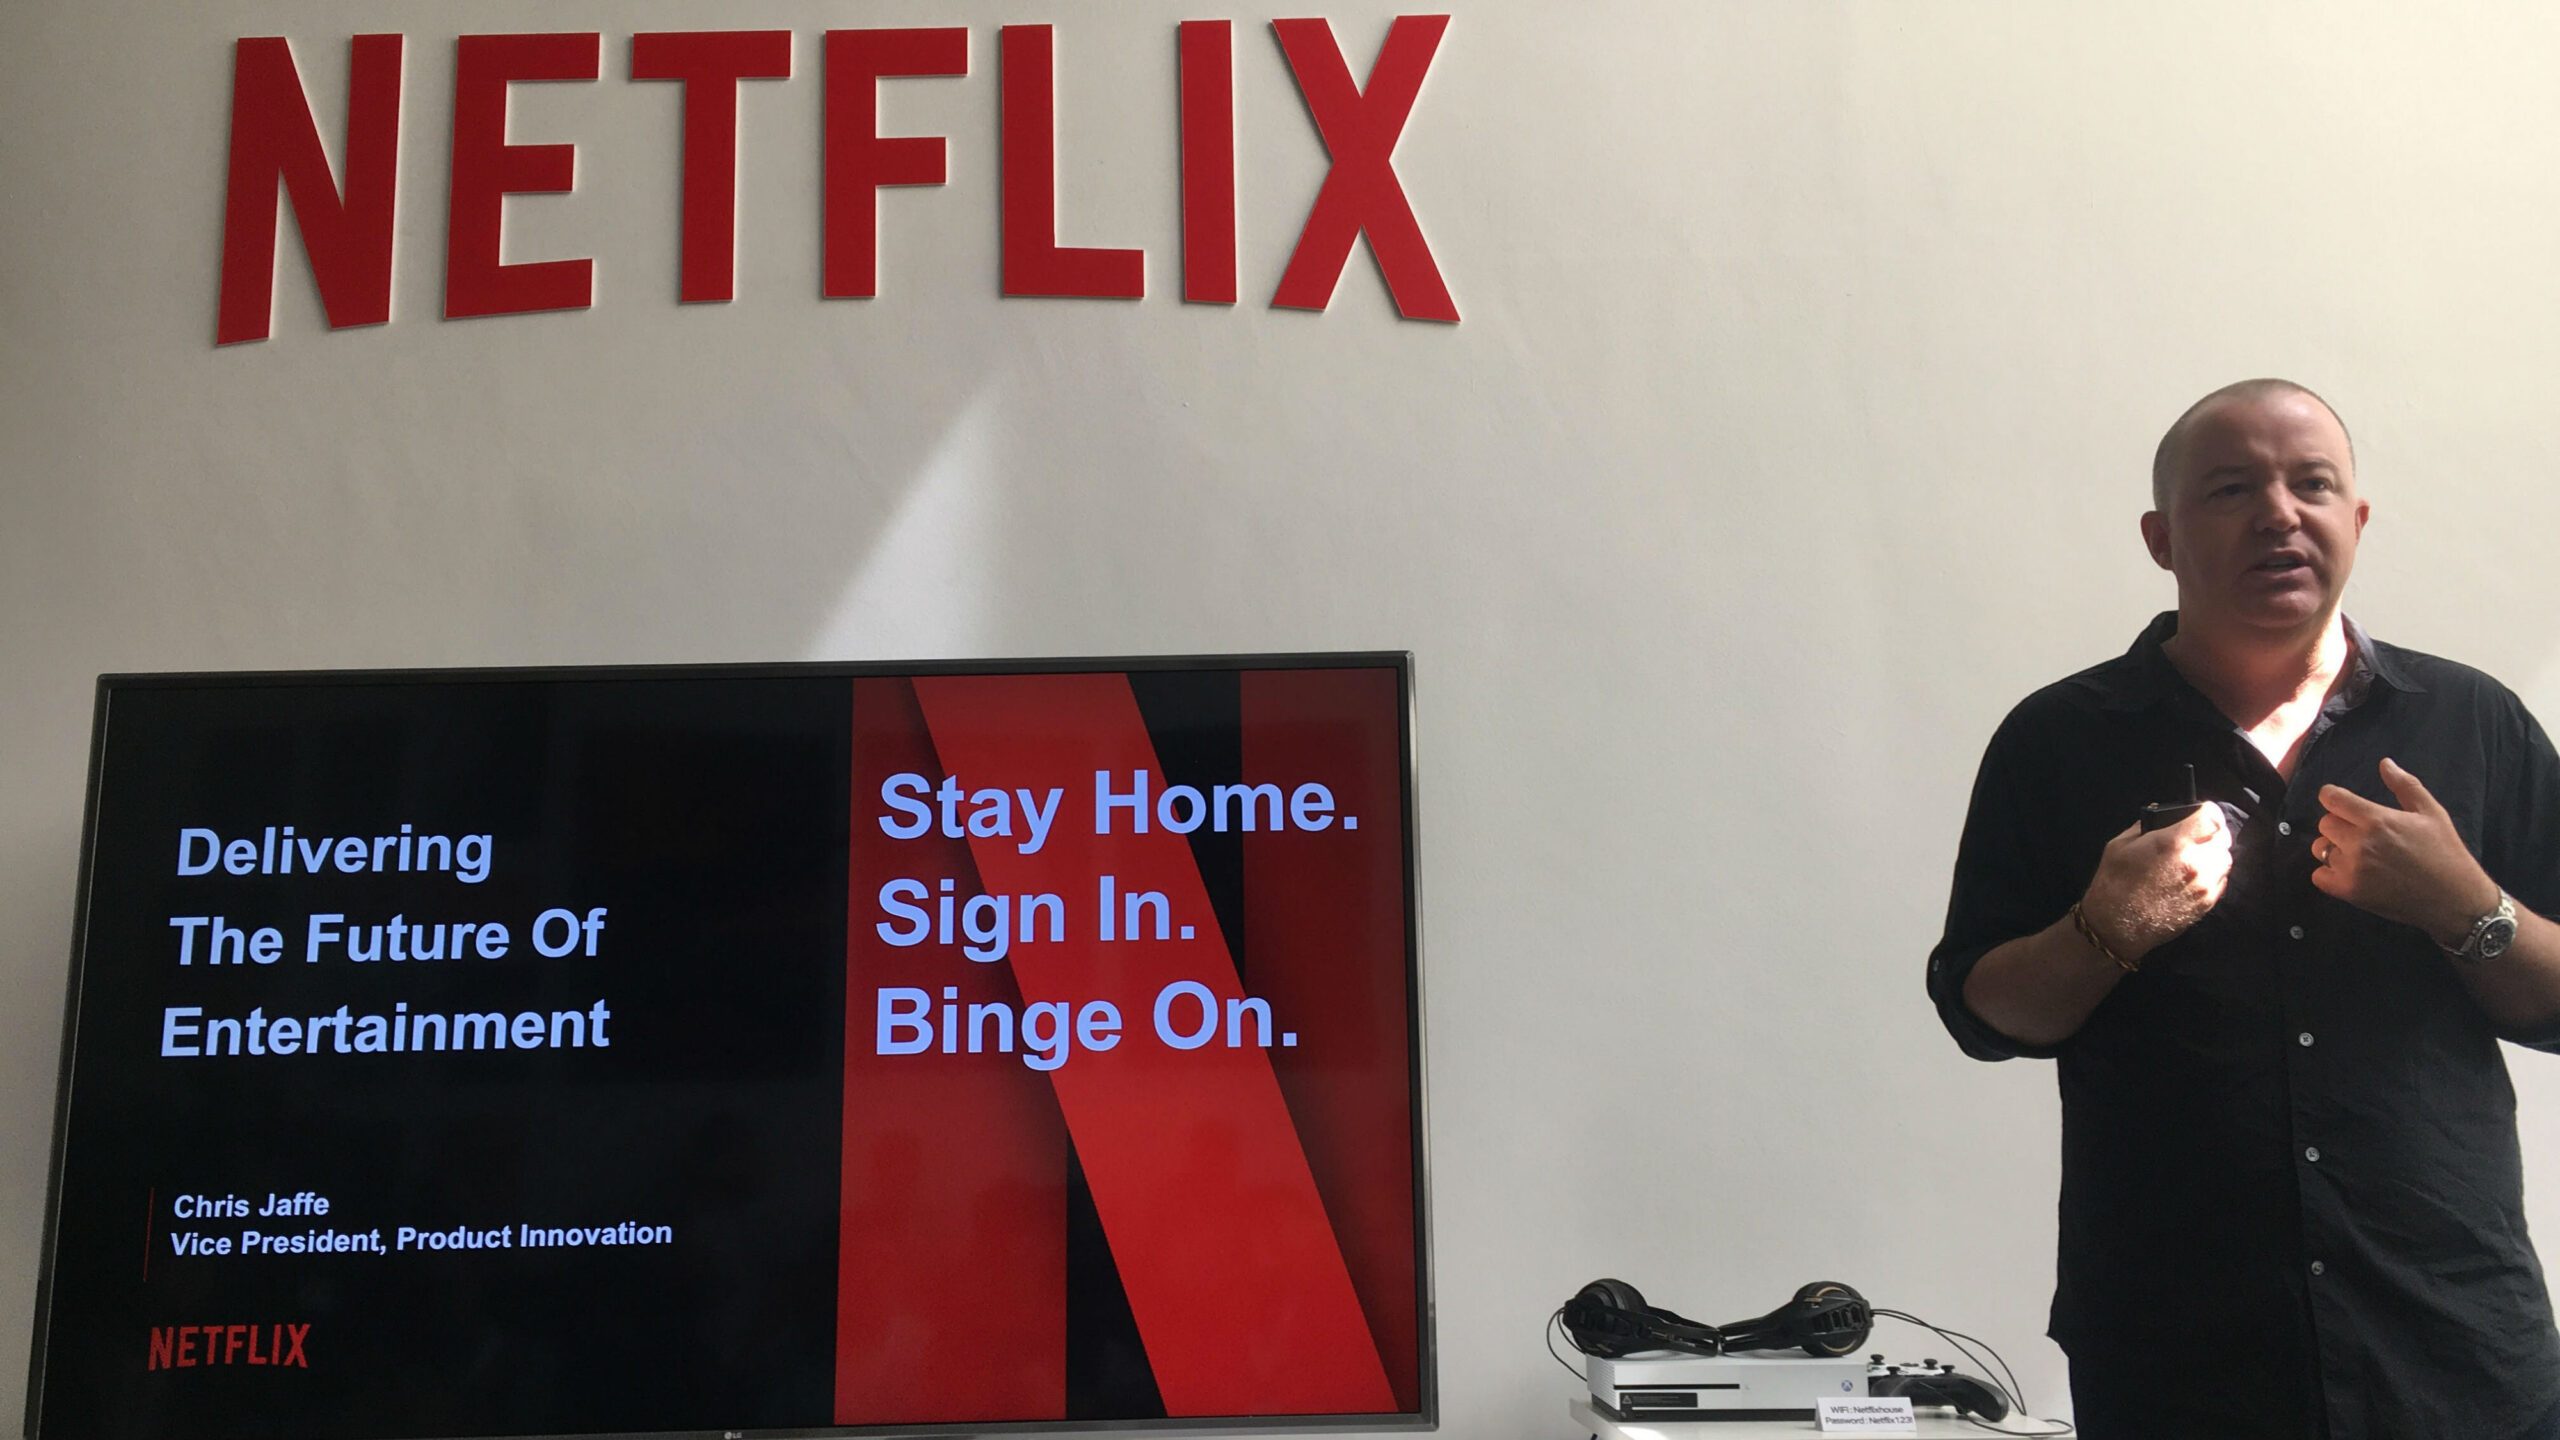 How Netflix influences home entertainment technology